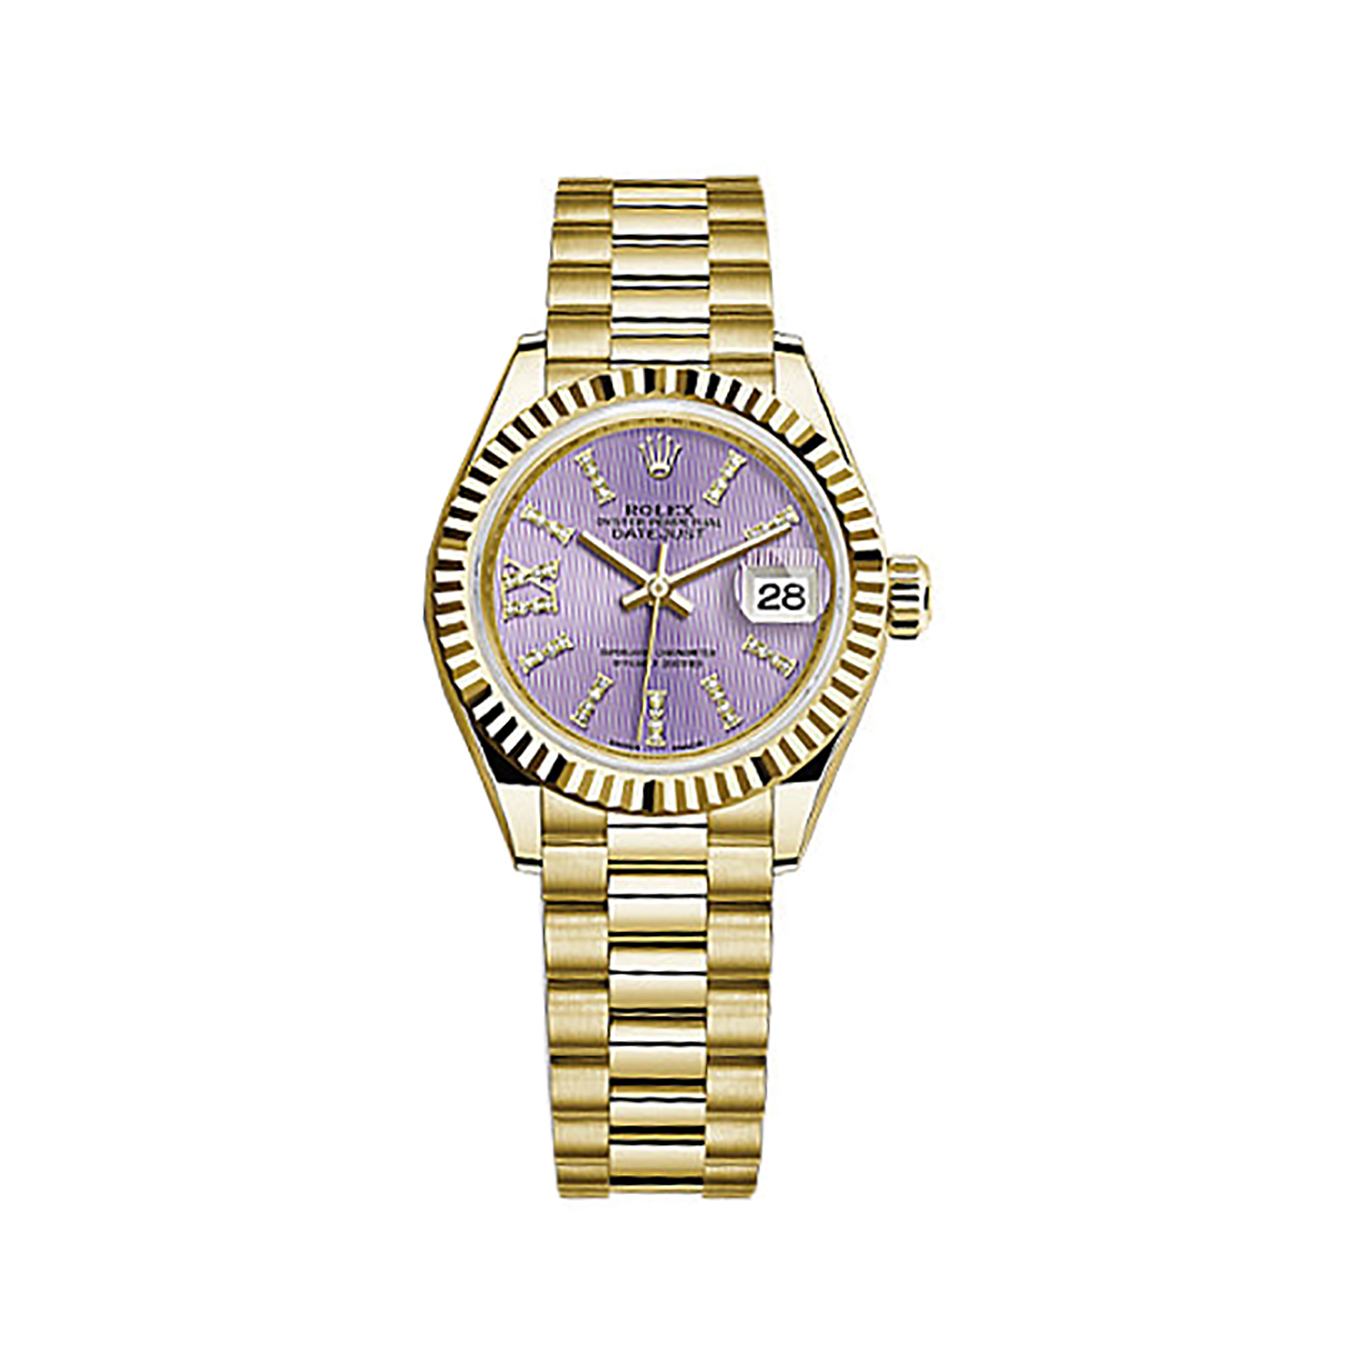 Lady-Datejust 28 279178 Gold Watch (Lilac Set with Diamonds)